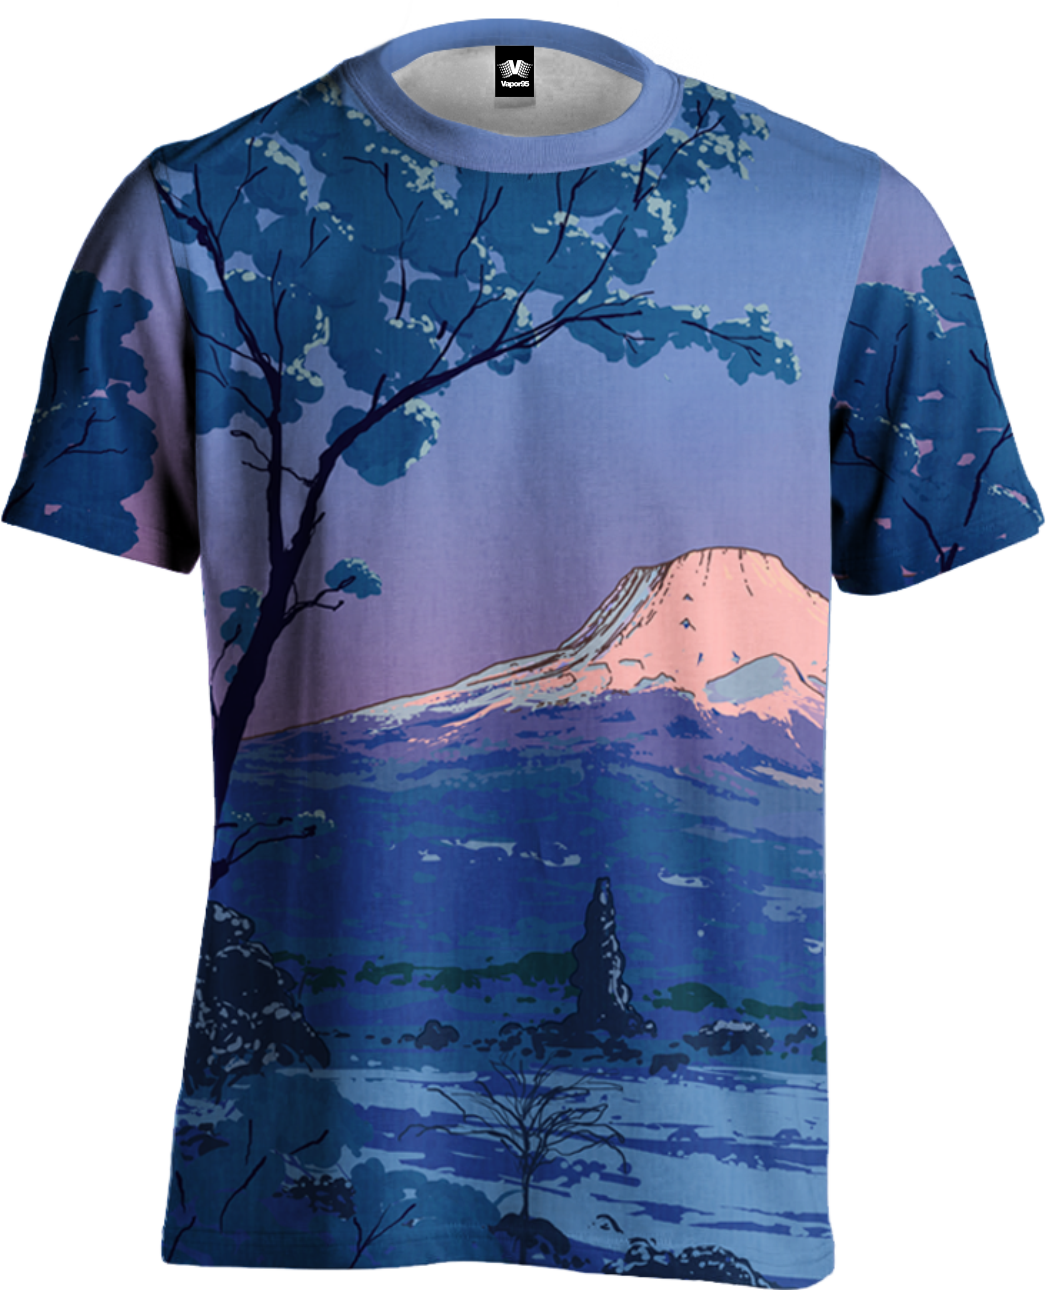 Mount Fuji Tee All Over Print Tee T6 3XL